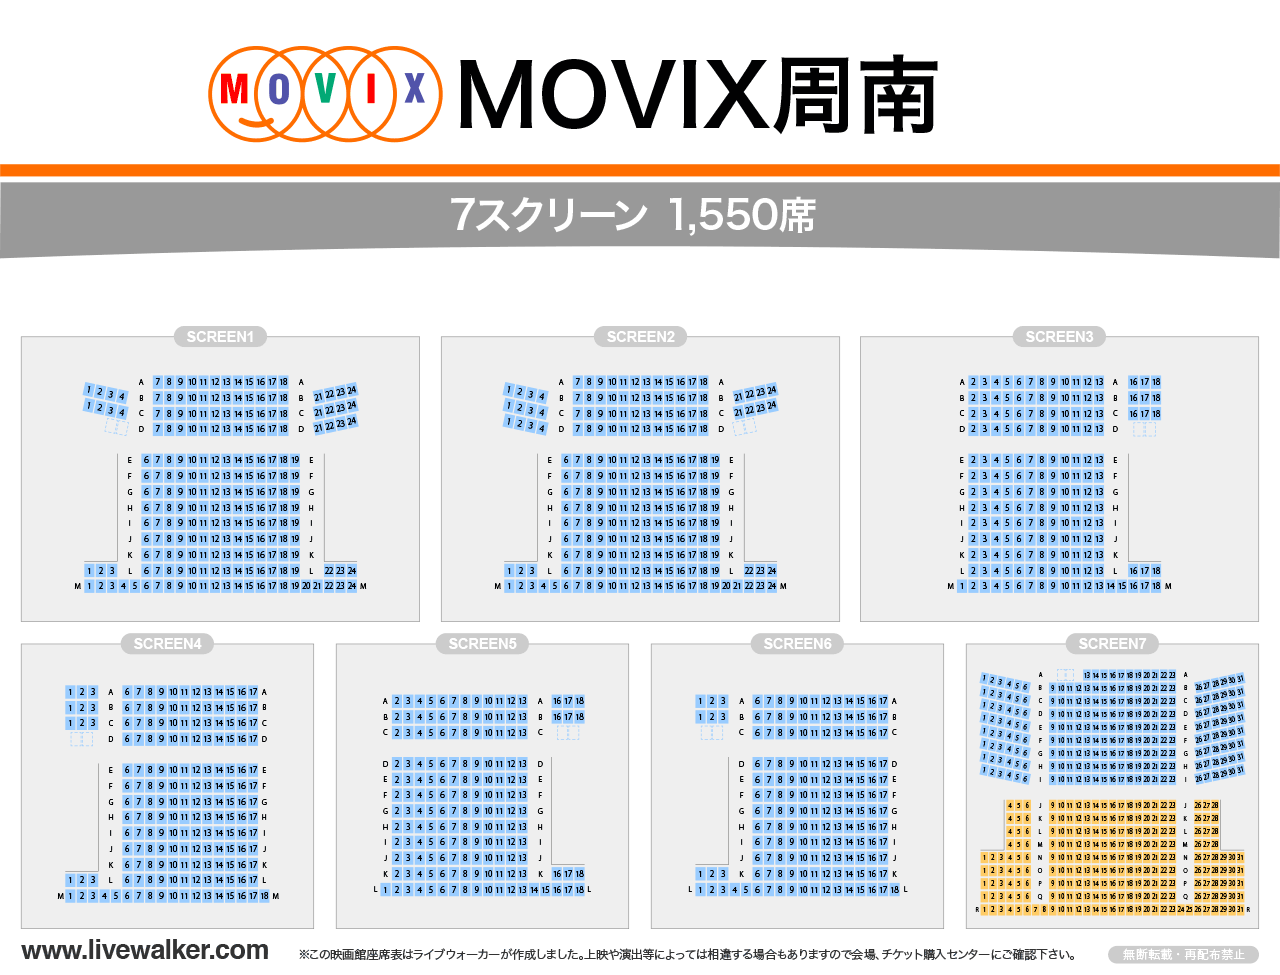 MOVIX周南シアターの座席表